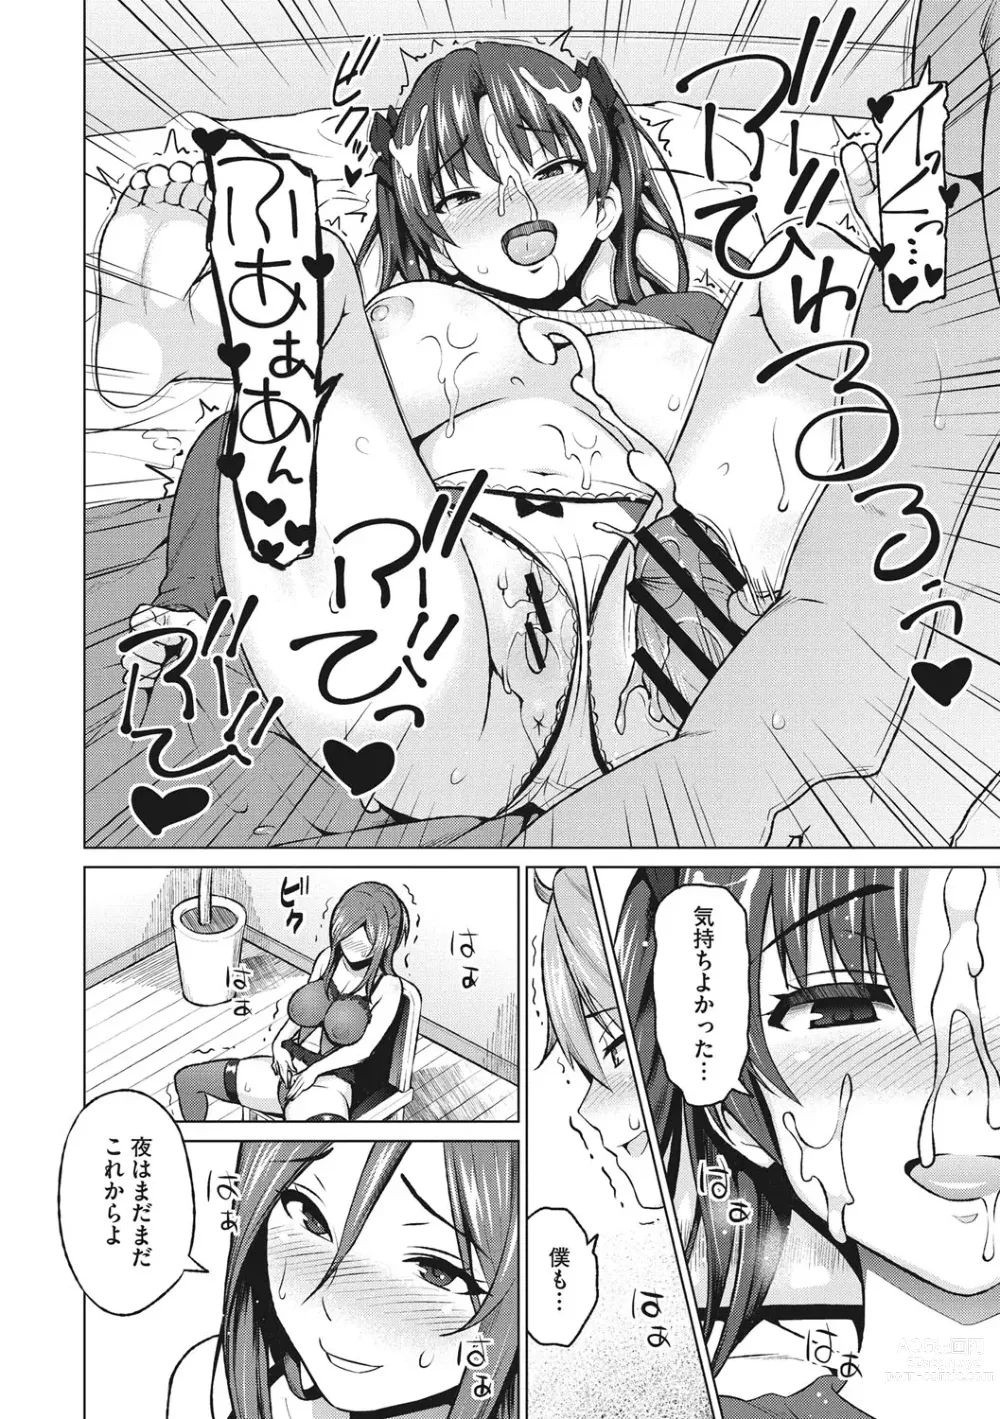 Page 183 of manga Risky Play